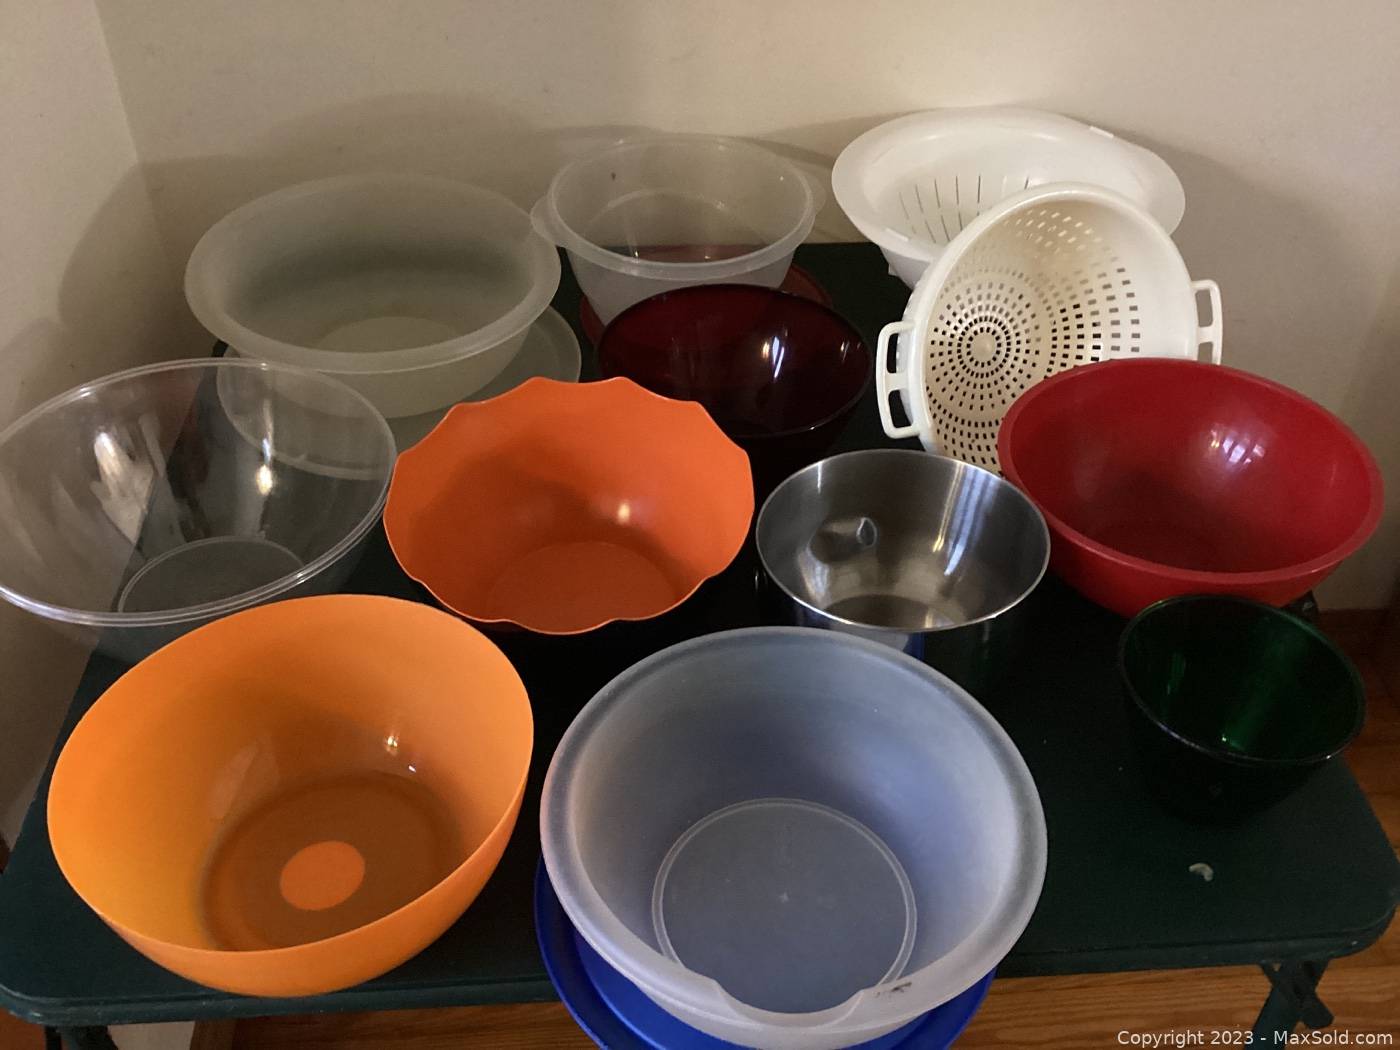 Bobby Flay Handled Ceramic Oval Pan